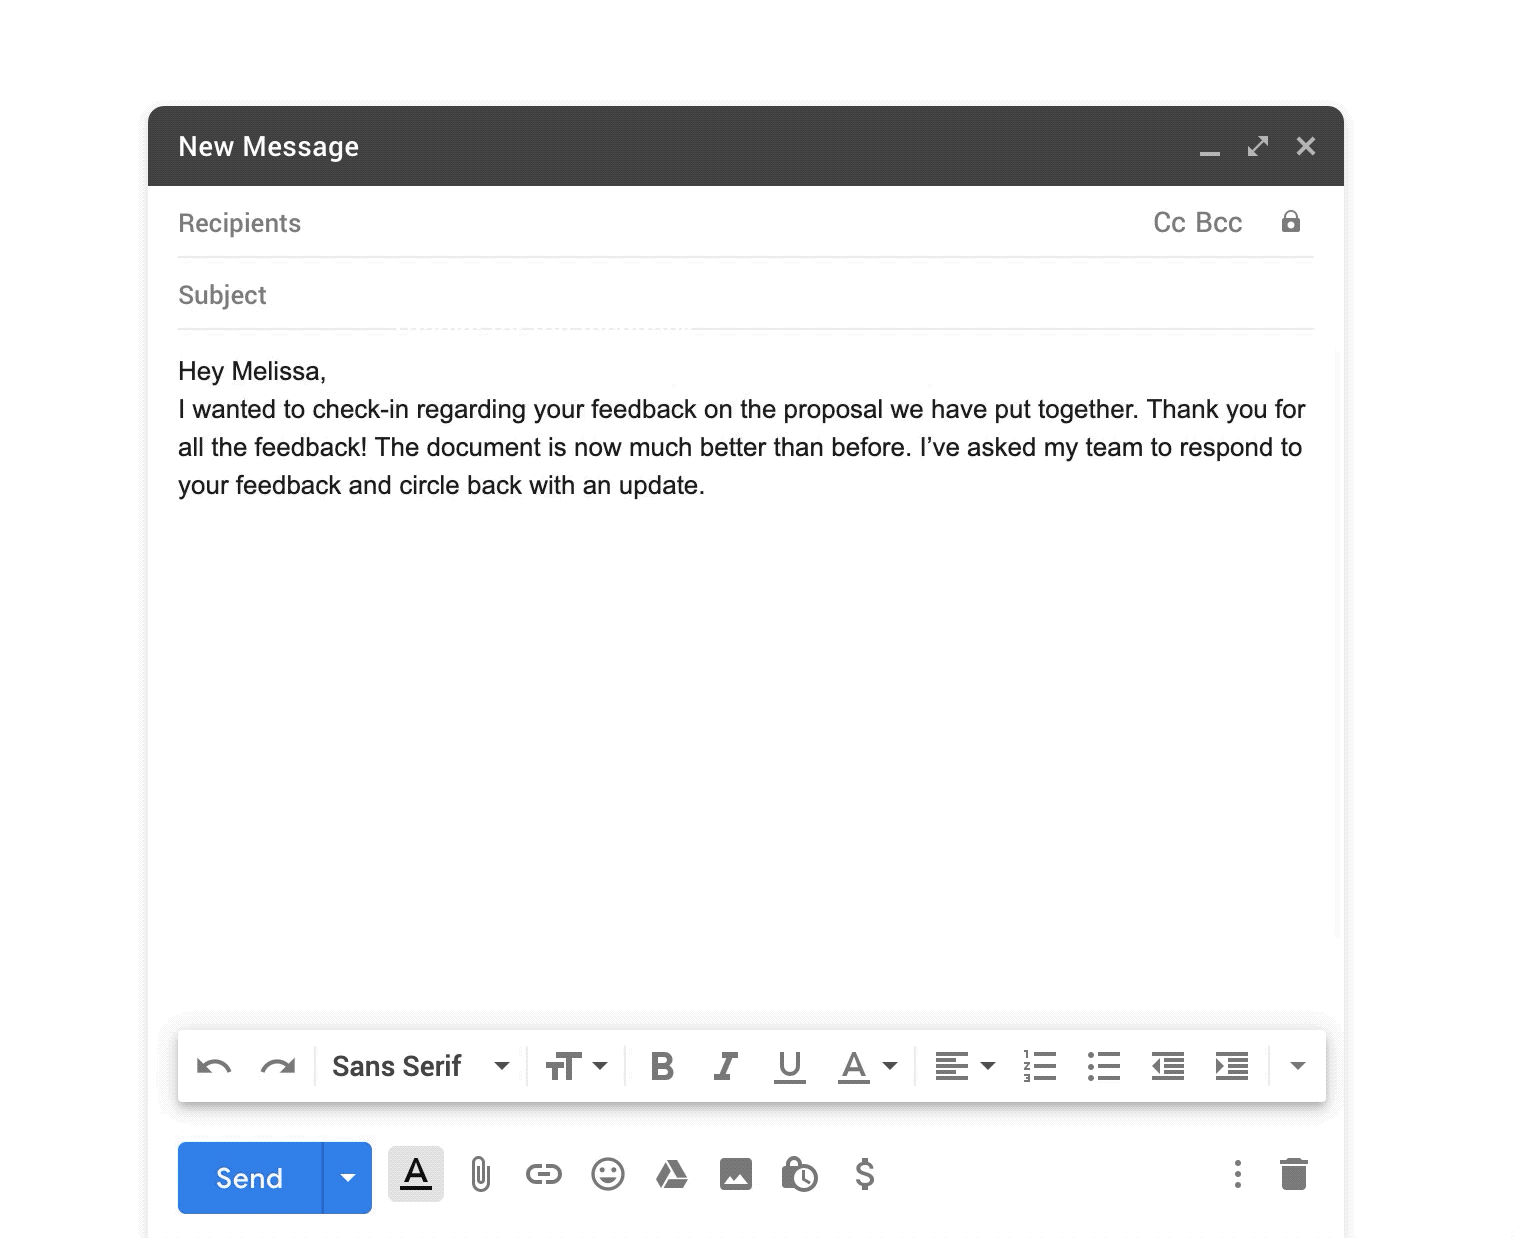 Gmail 引進人工智能  協助修正英文錯字和文法  